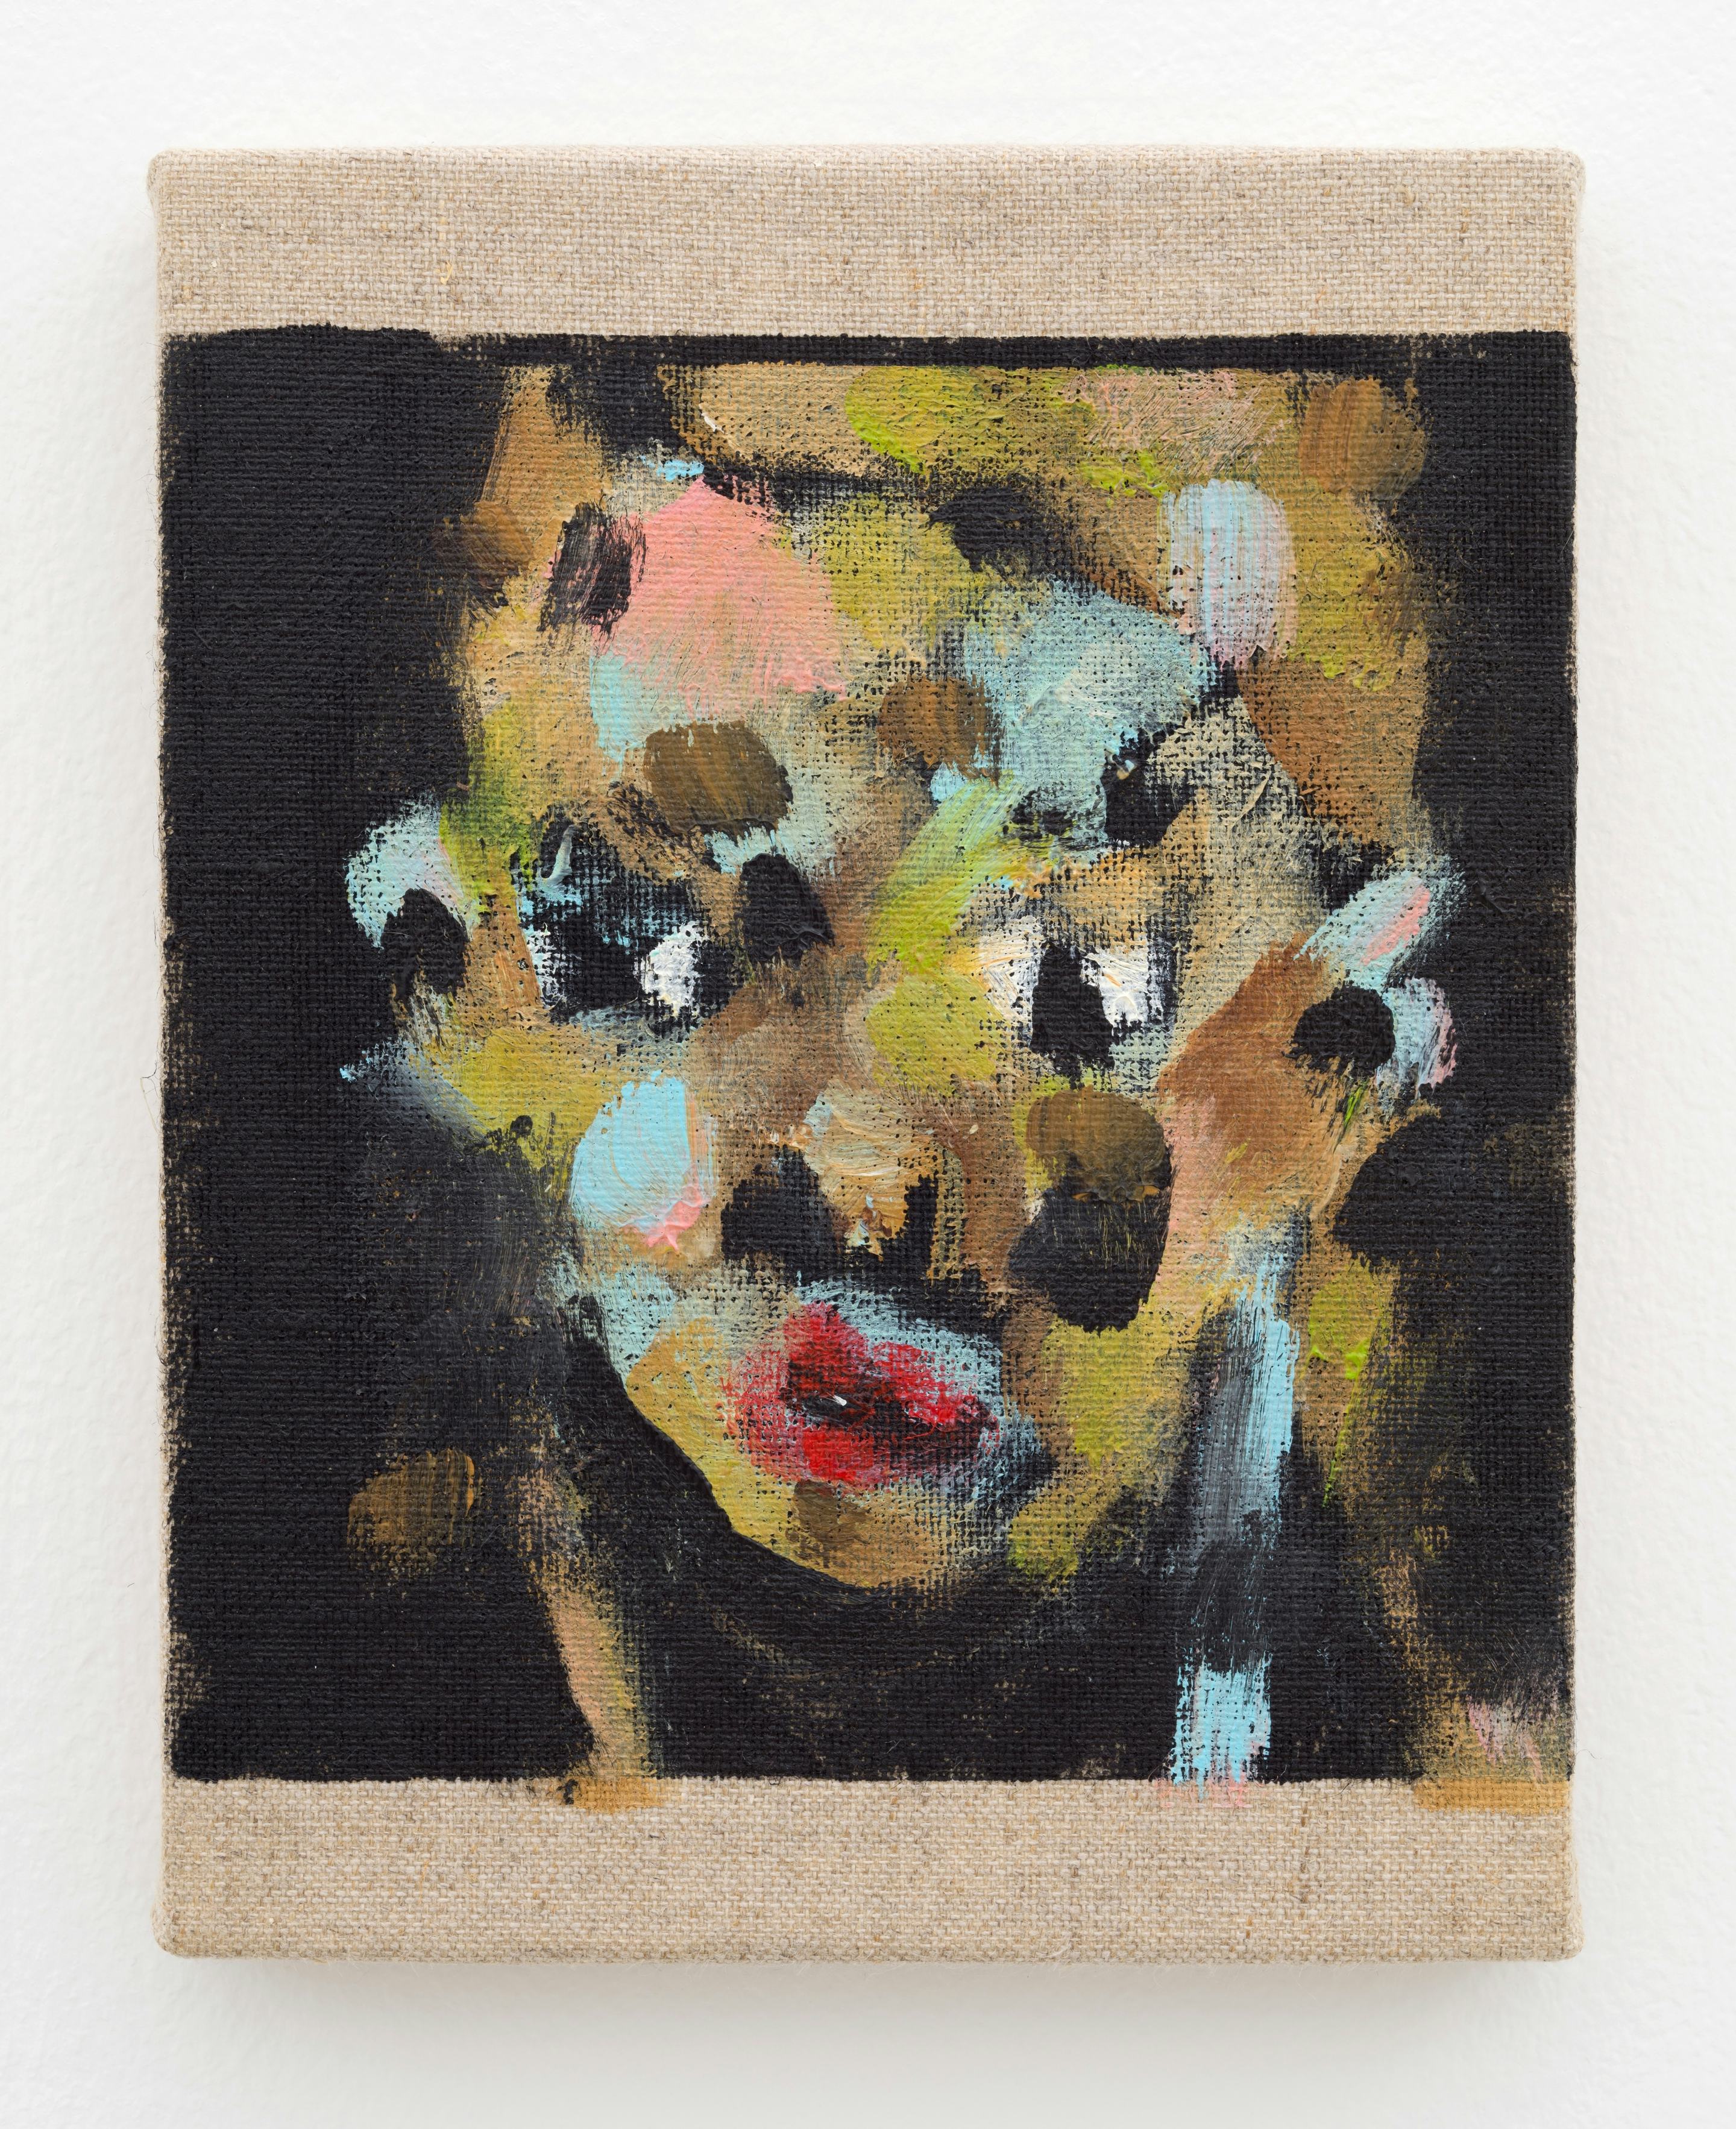 2016 Face 06 (2016)
Acrylic on canvas. 7 x 5.5 inches, 18 x 14 cm